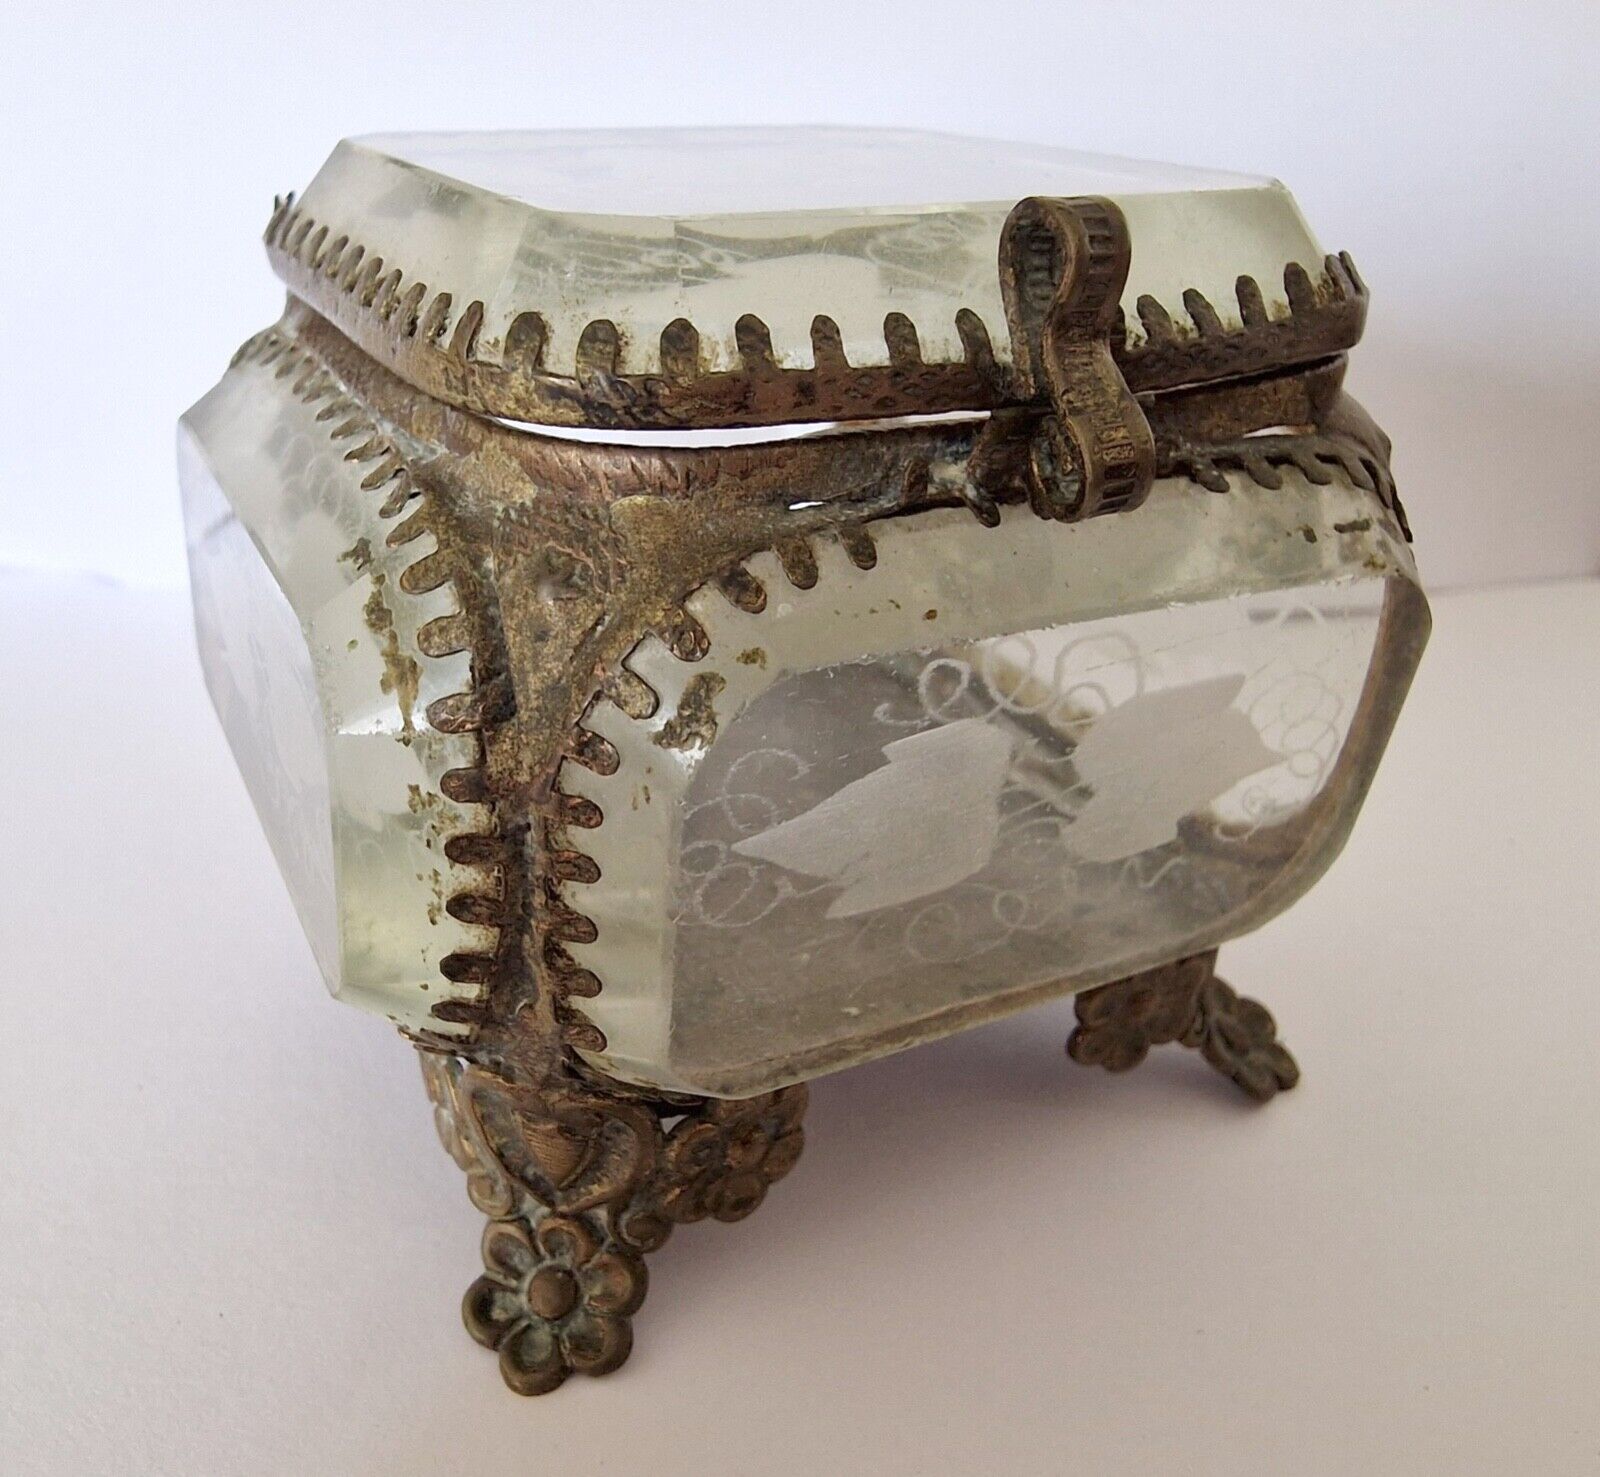 ANTIQUE ORMOLU GLASS TRINKET BOX. FRANCE, 19th CENTURY